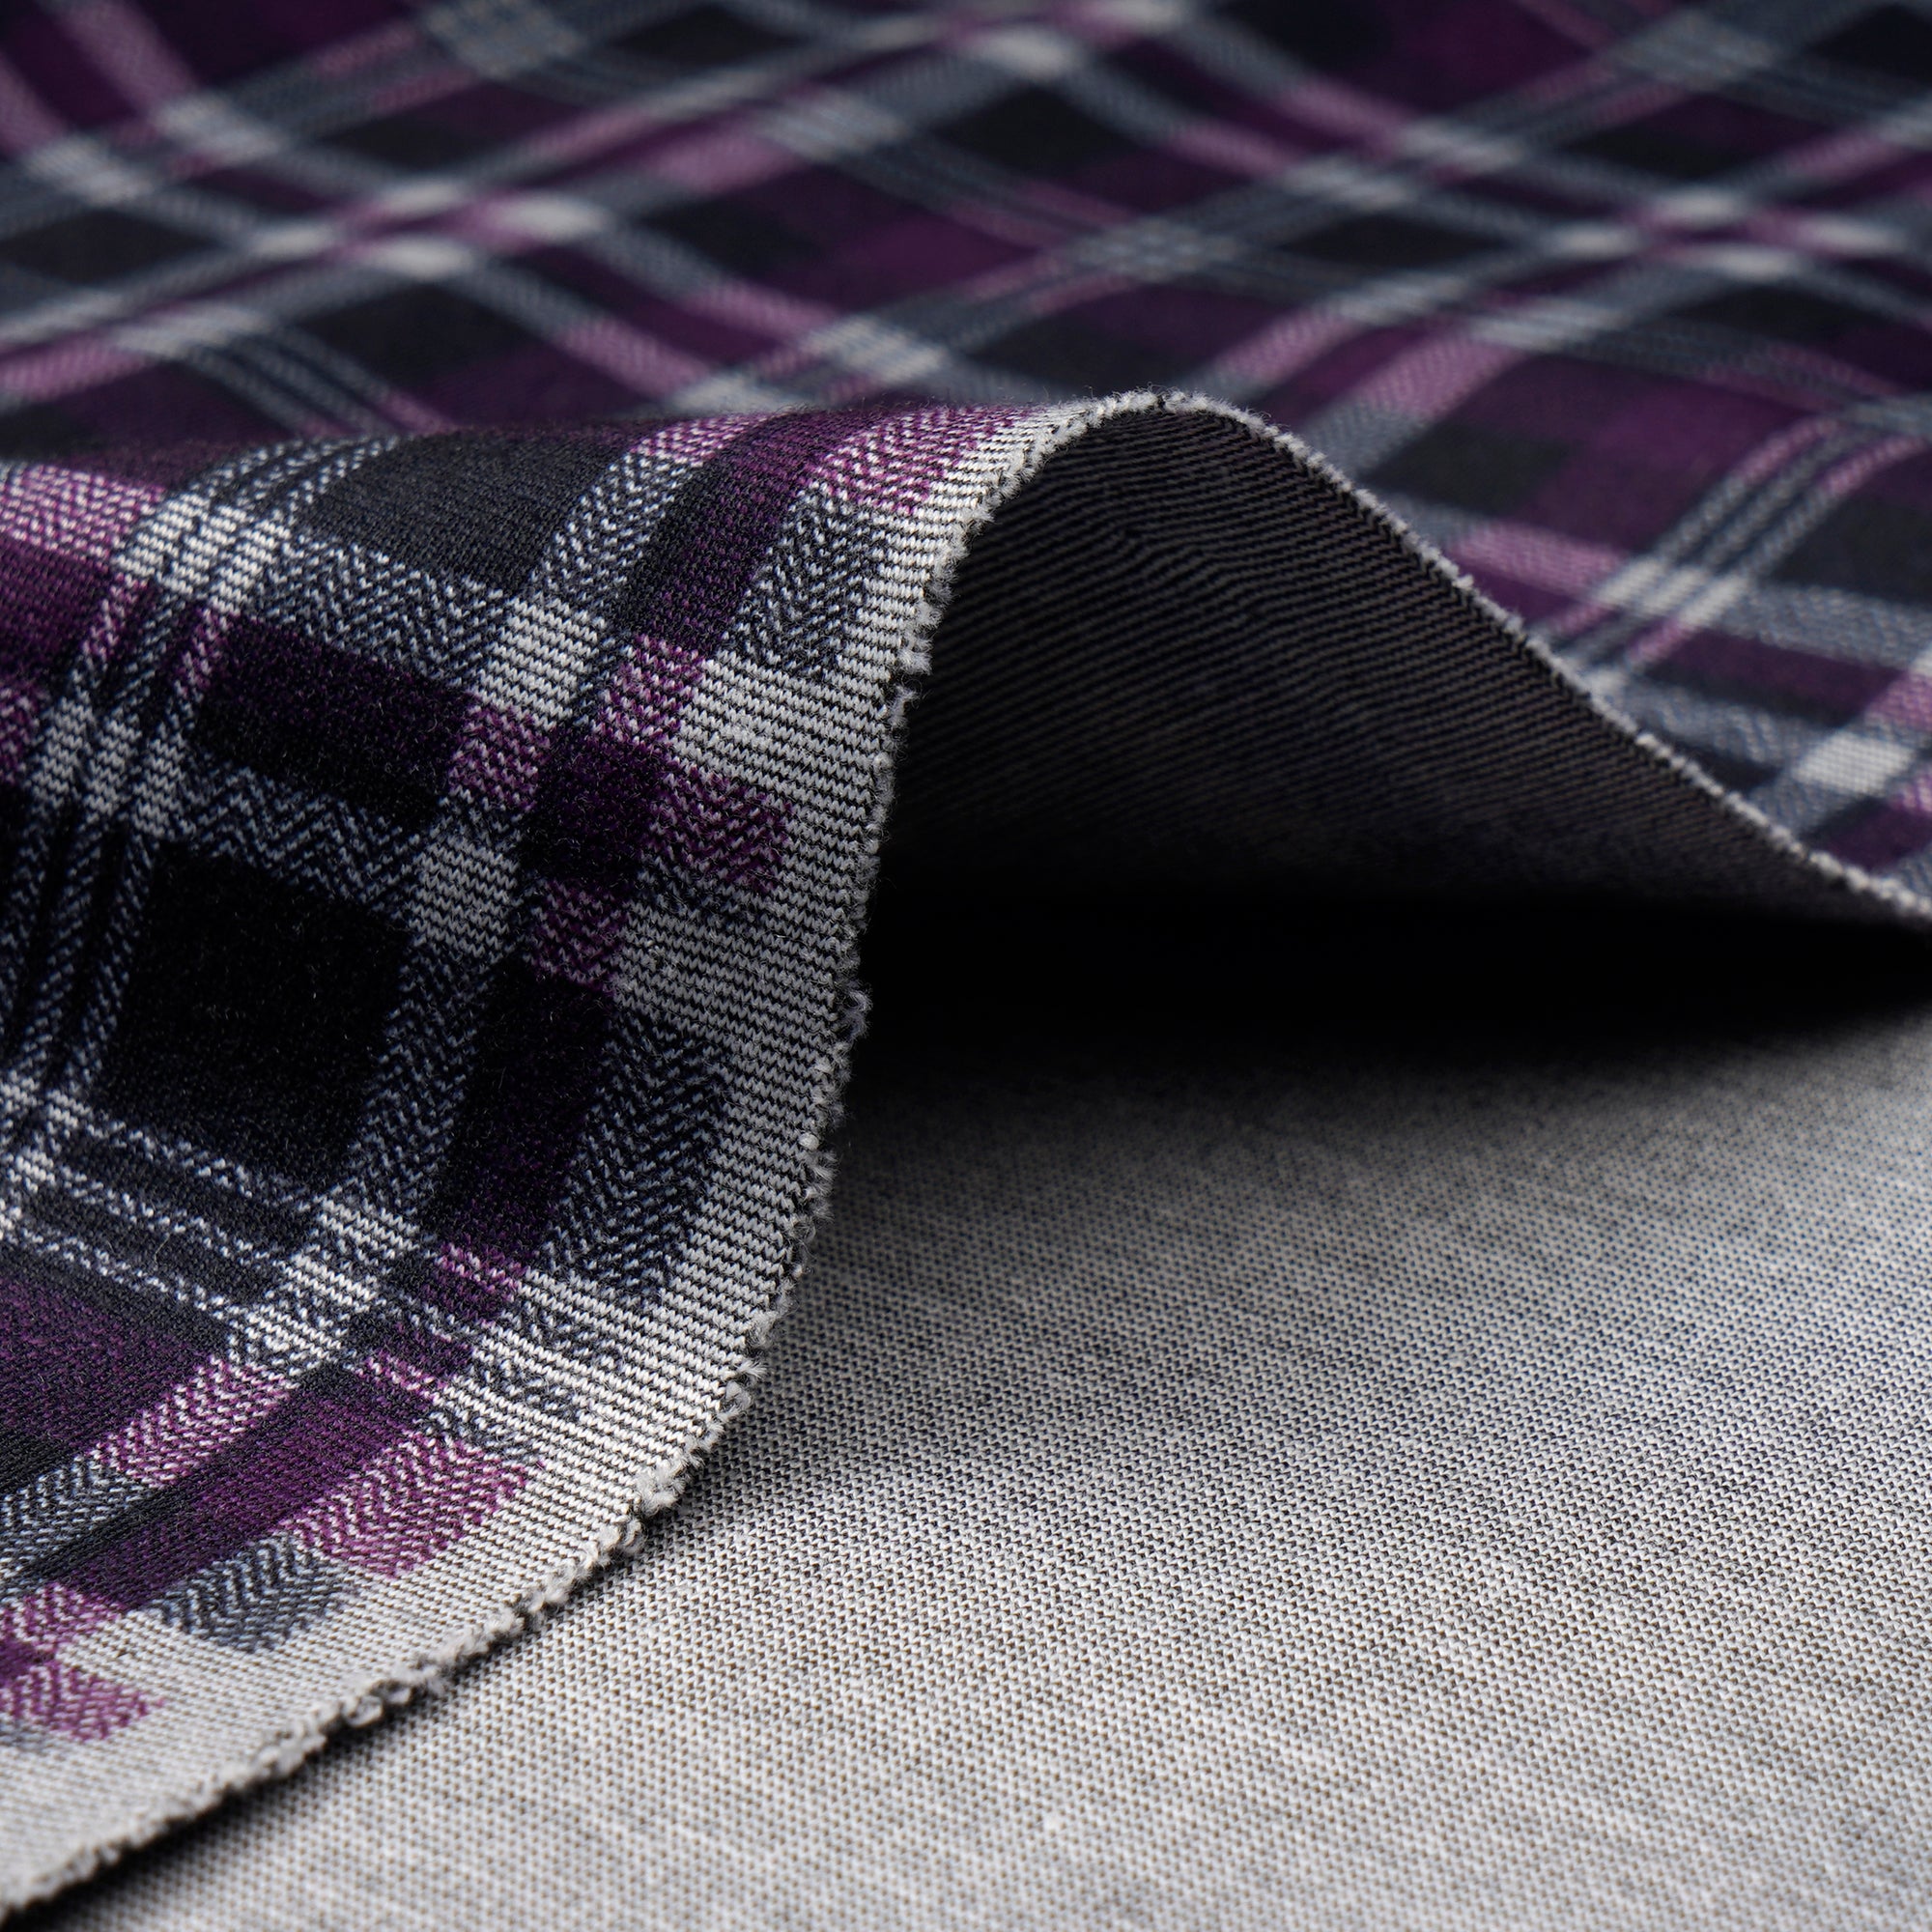 Purple-Black Check Pattern Premium Men's Collection Printed Stretch Roma Fabric (60" Width)